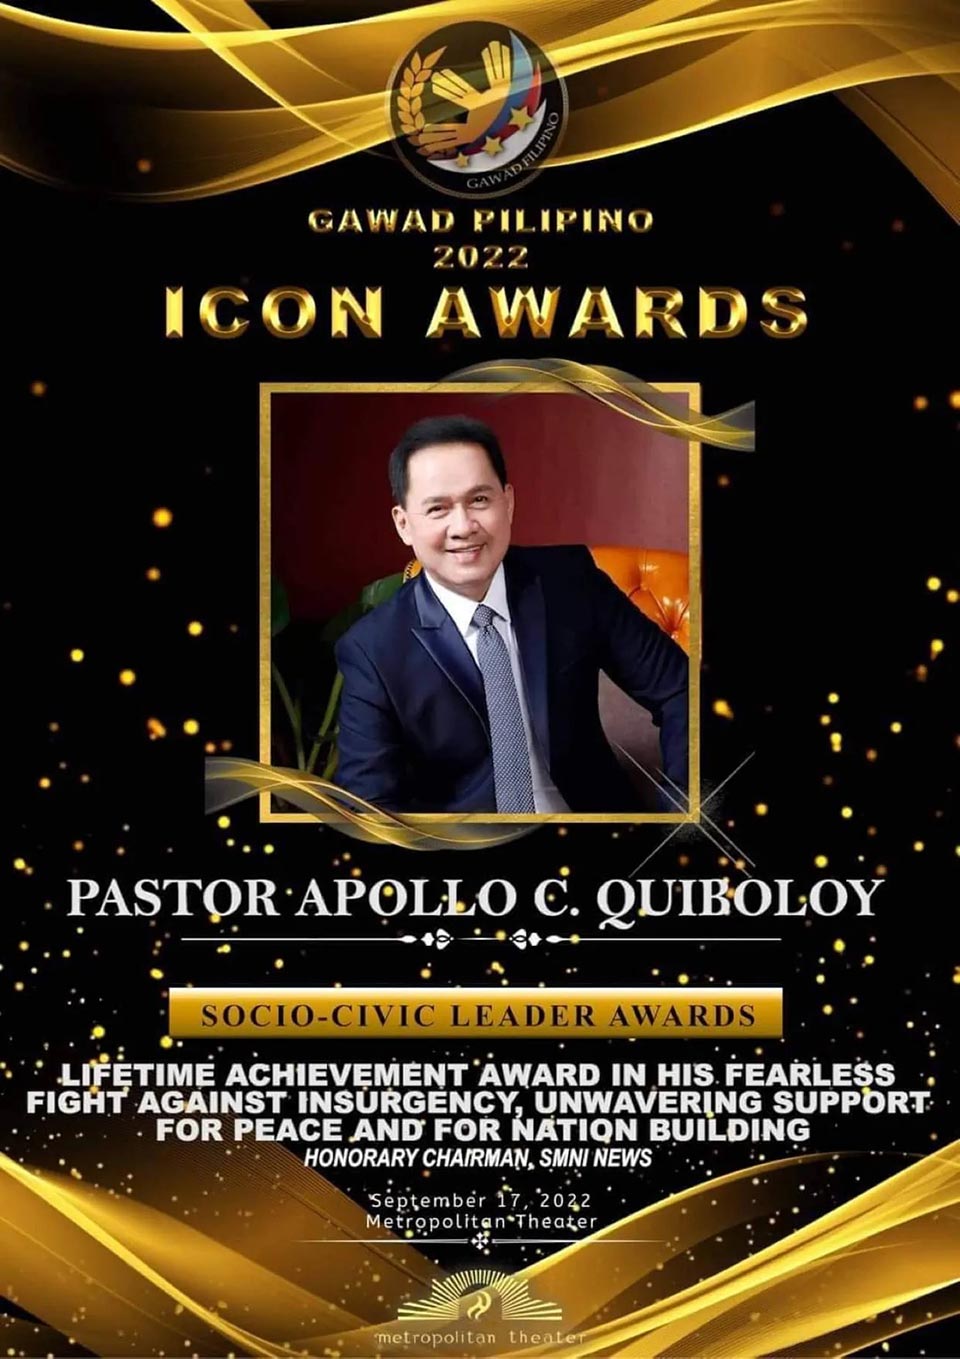 Pastor Apollo Quiboloy Receives Lifetime Achievement Award